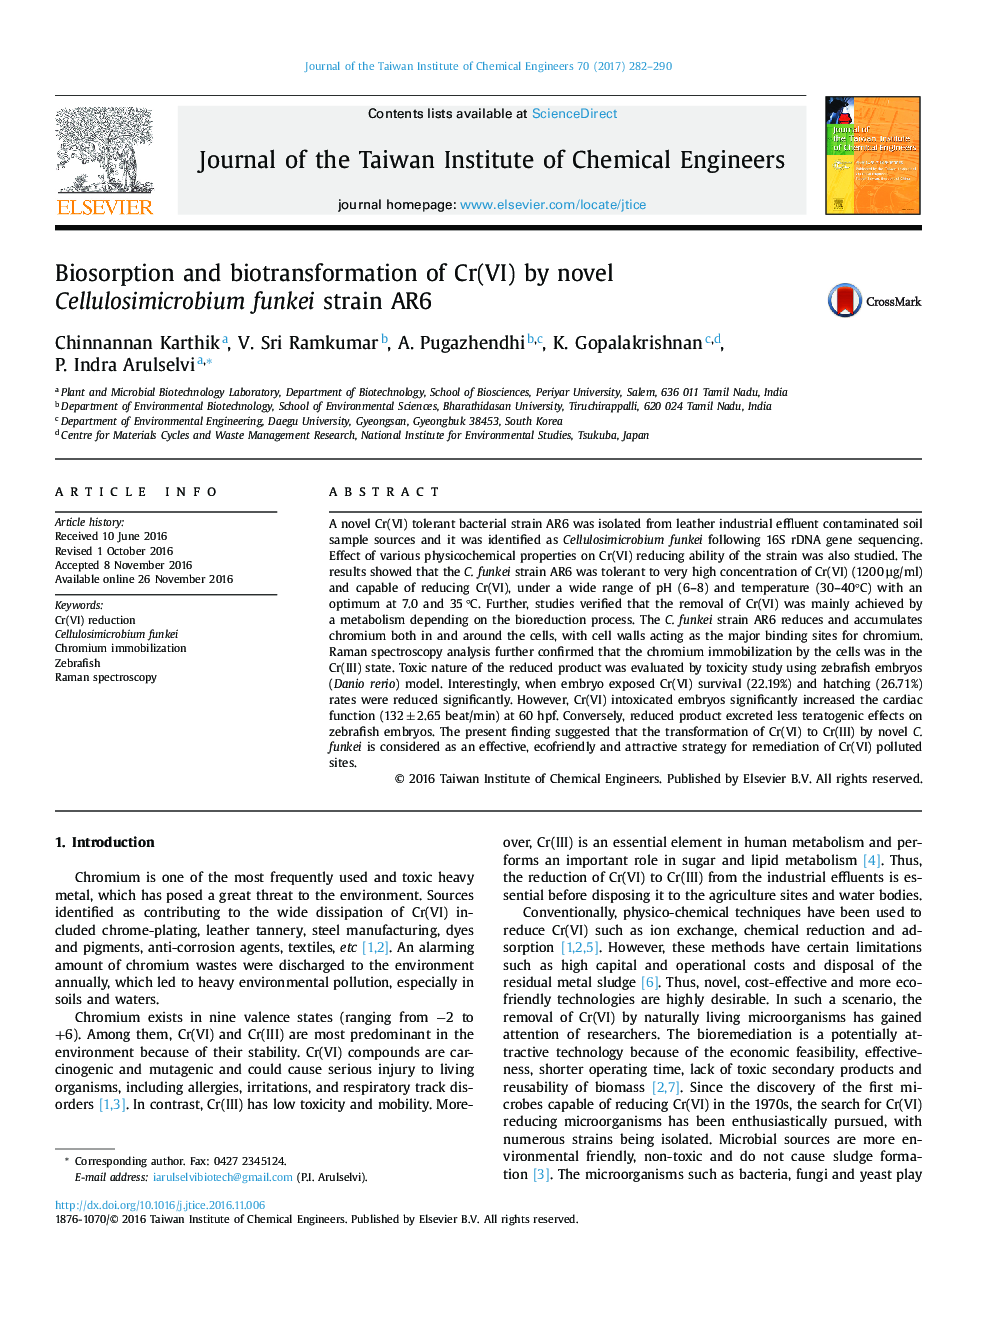 Biosorption and biotransformation of Cr(VI) by novel Cellulosimicrobium funkei strain AR6